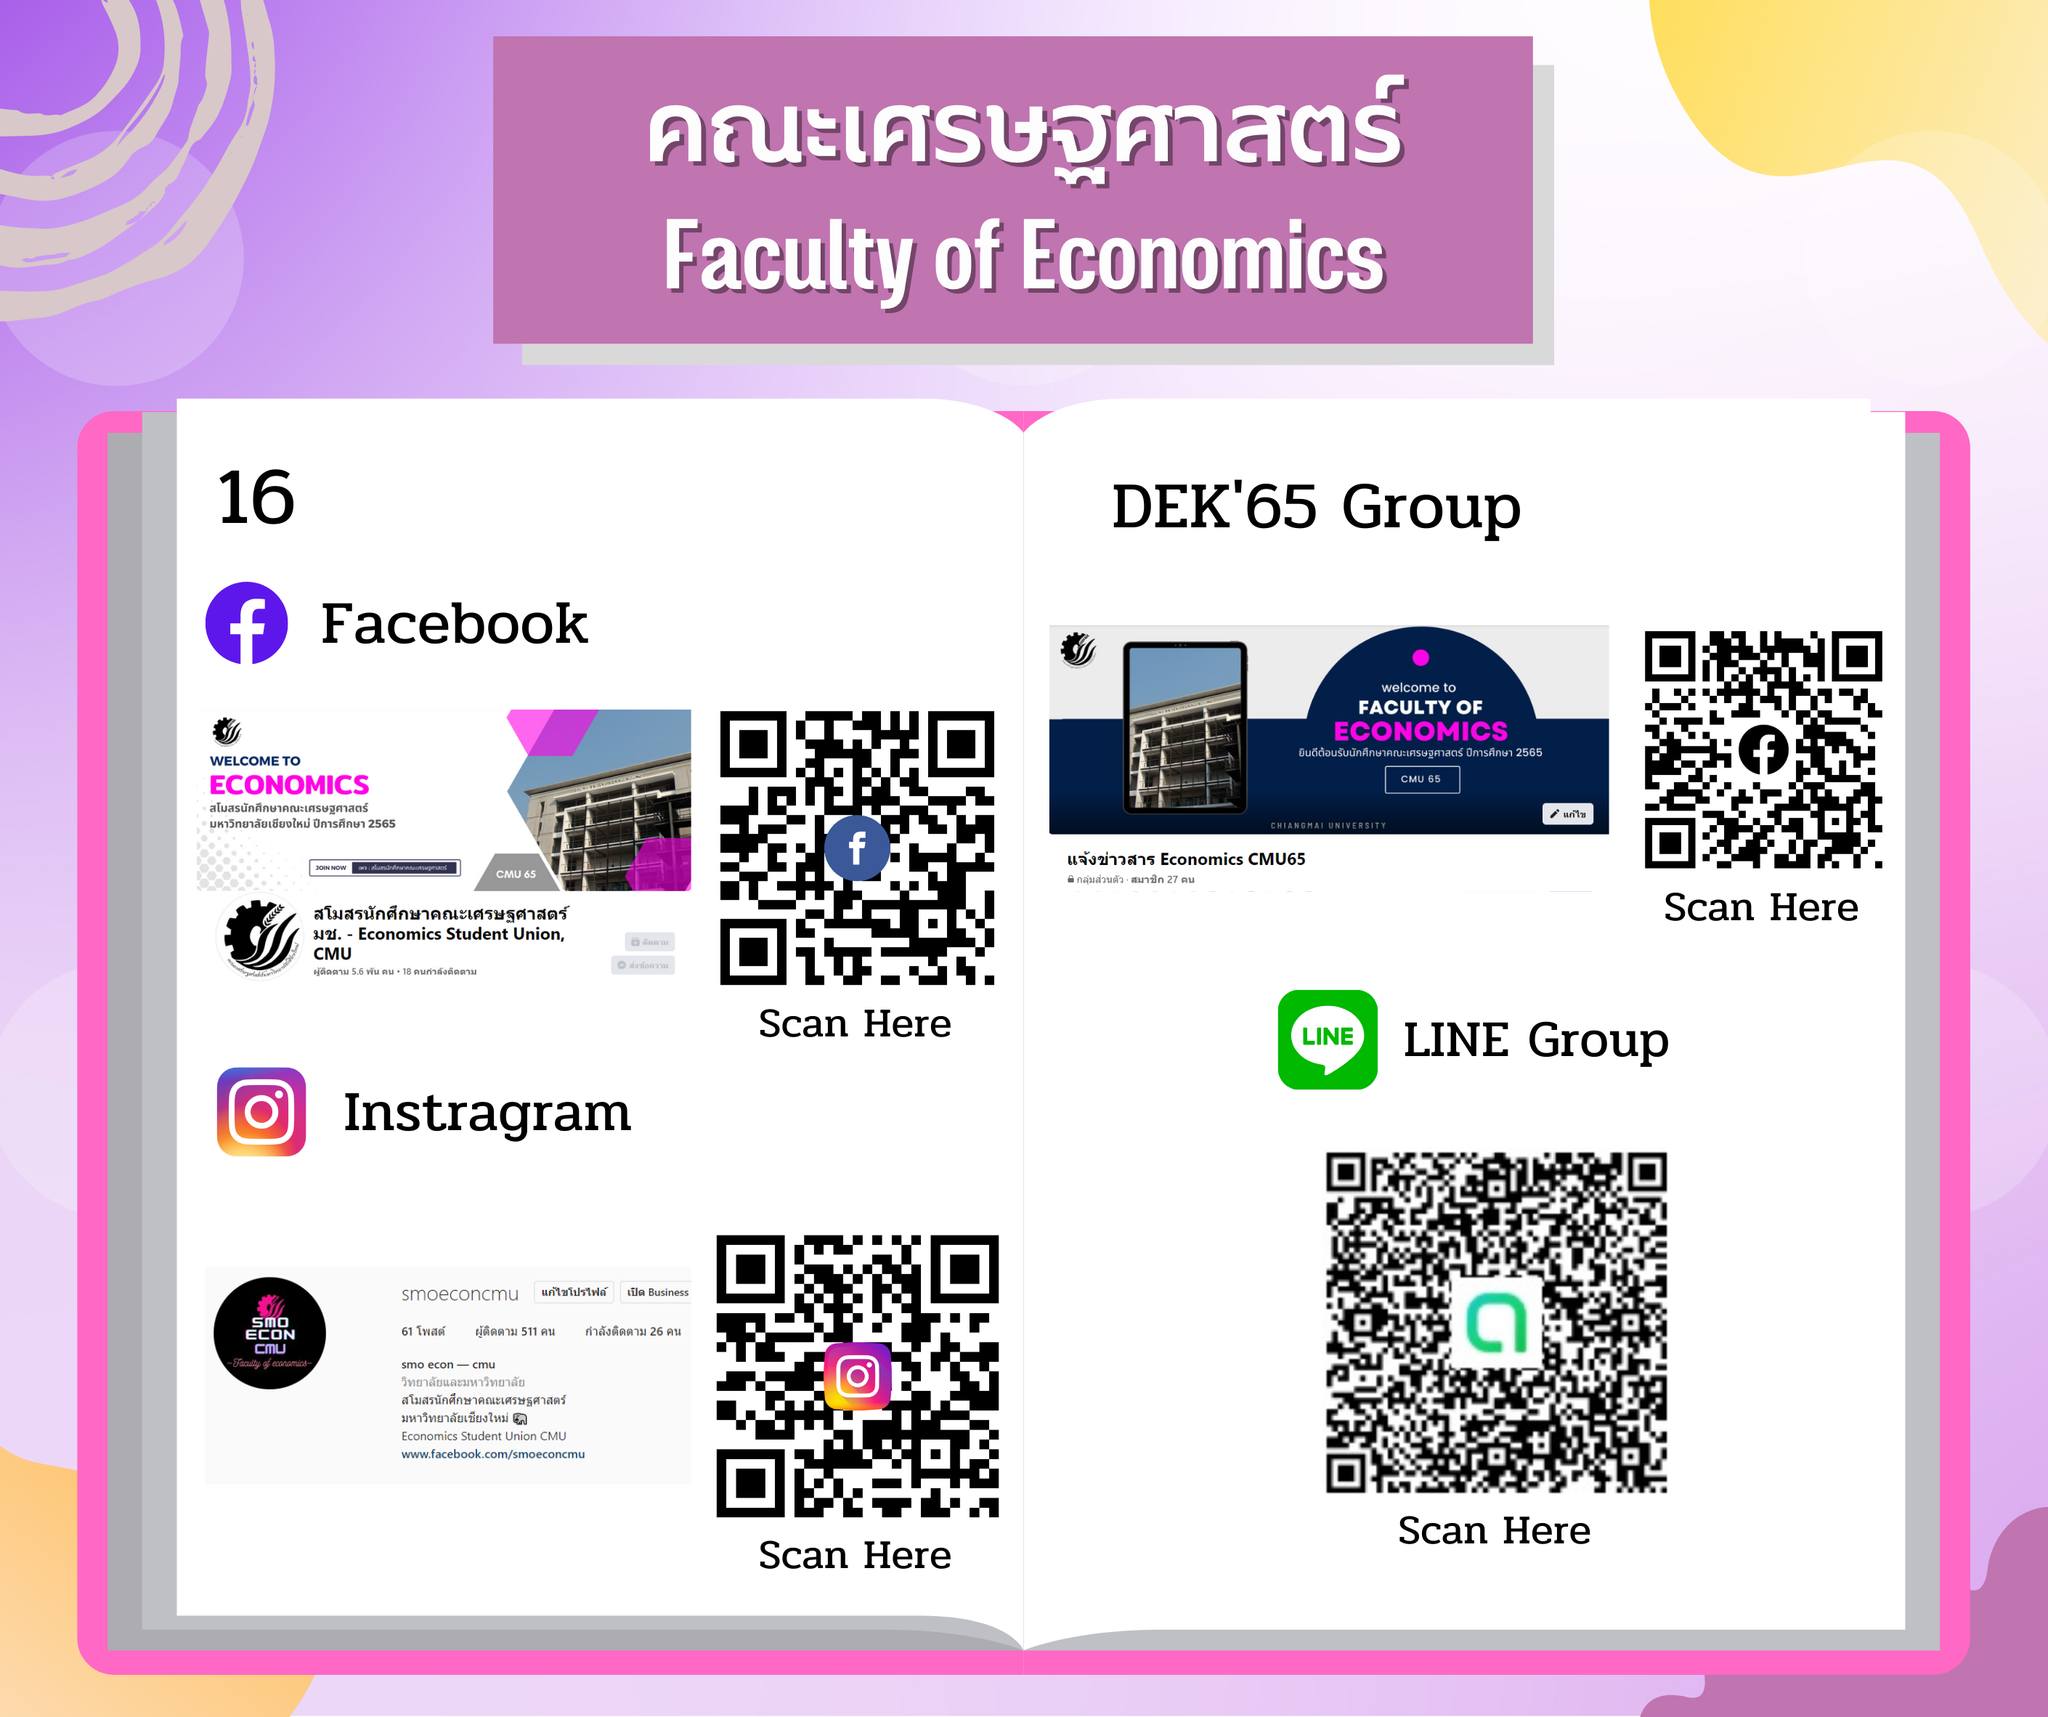 Student Union of Faculty of Economics